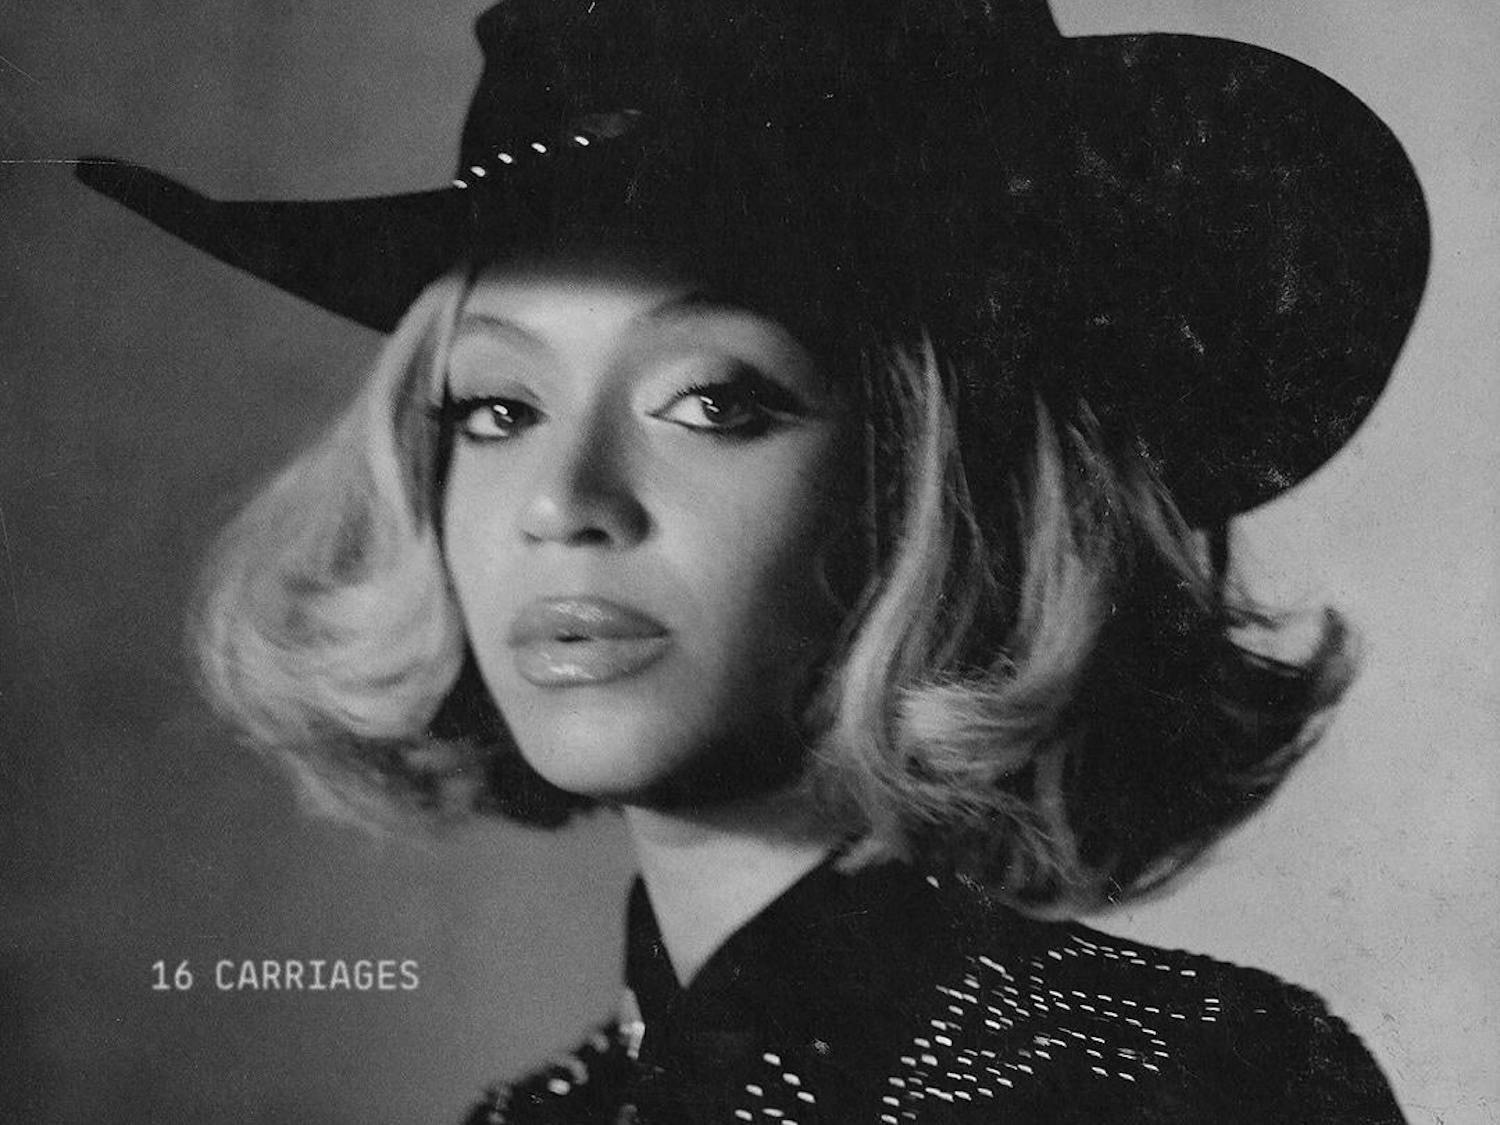 &nbsp;Beyoncé's &nbsp;“TEXAS HOLD ‘EM” &nbsp;hit No. 1 on the coveted Billboard All-Genre Hot 100 chart.